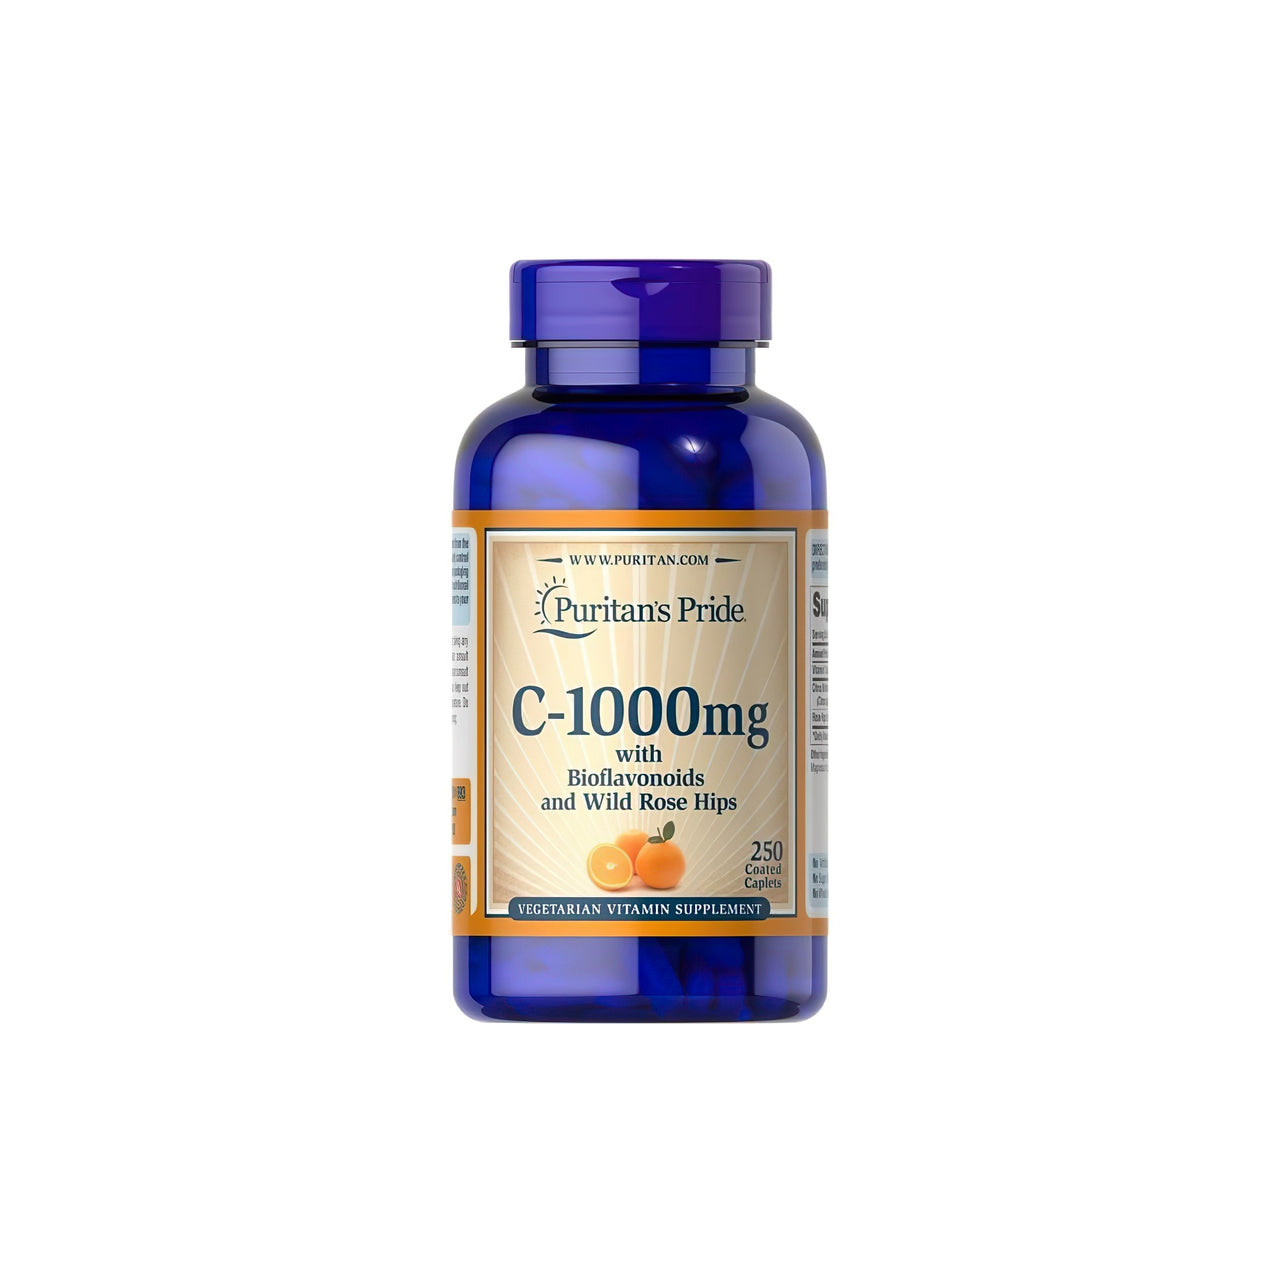 Um frasco de Puritan's Pride Vitamin C-1000 mg with Bioflavonoids & Rose Hips 250 Caplets.